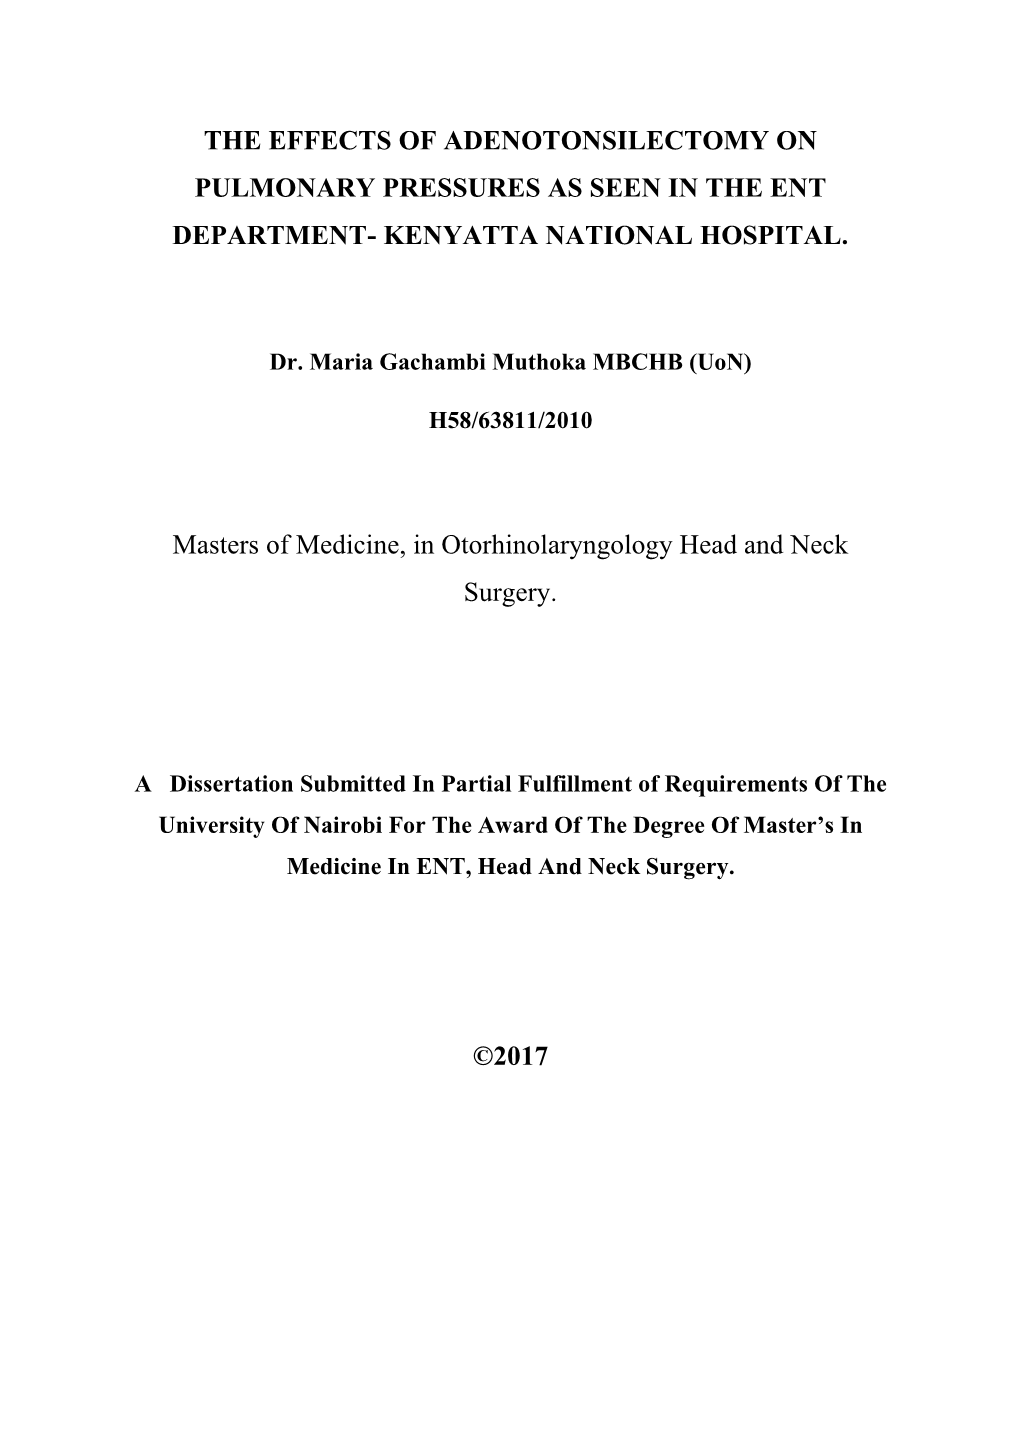 Dr. Maria Gachambi Muthoka MBCHB (Uon)